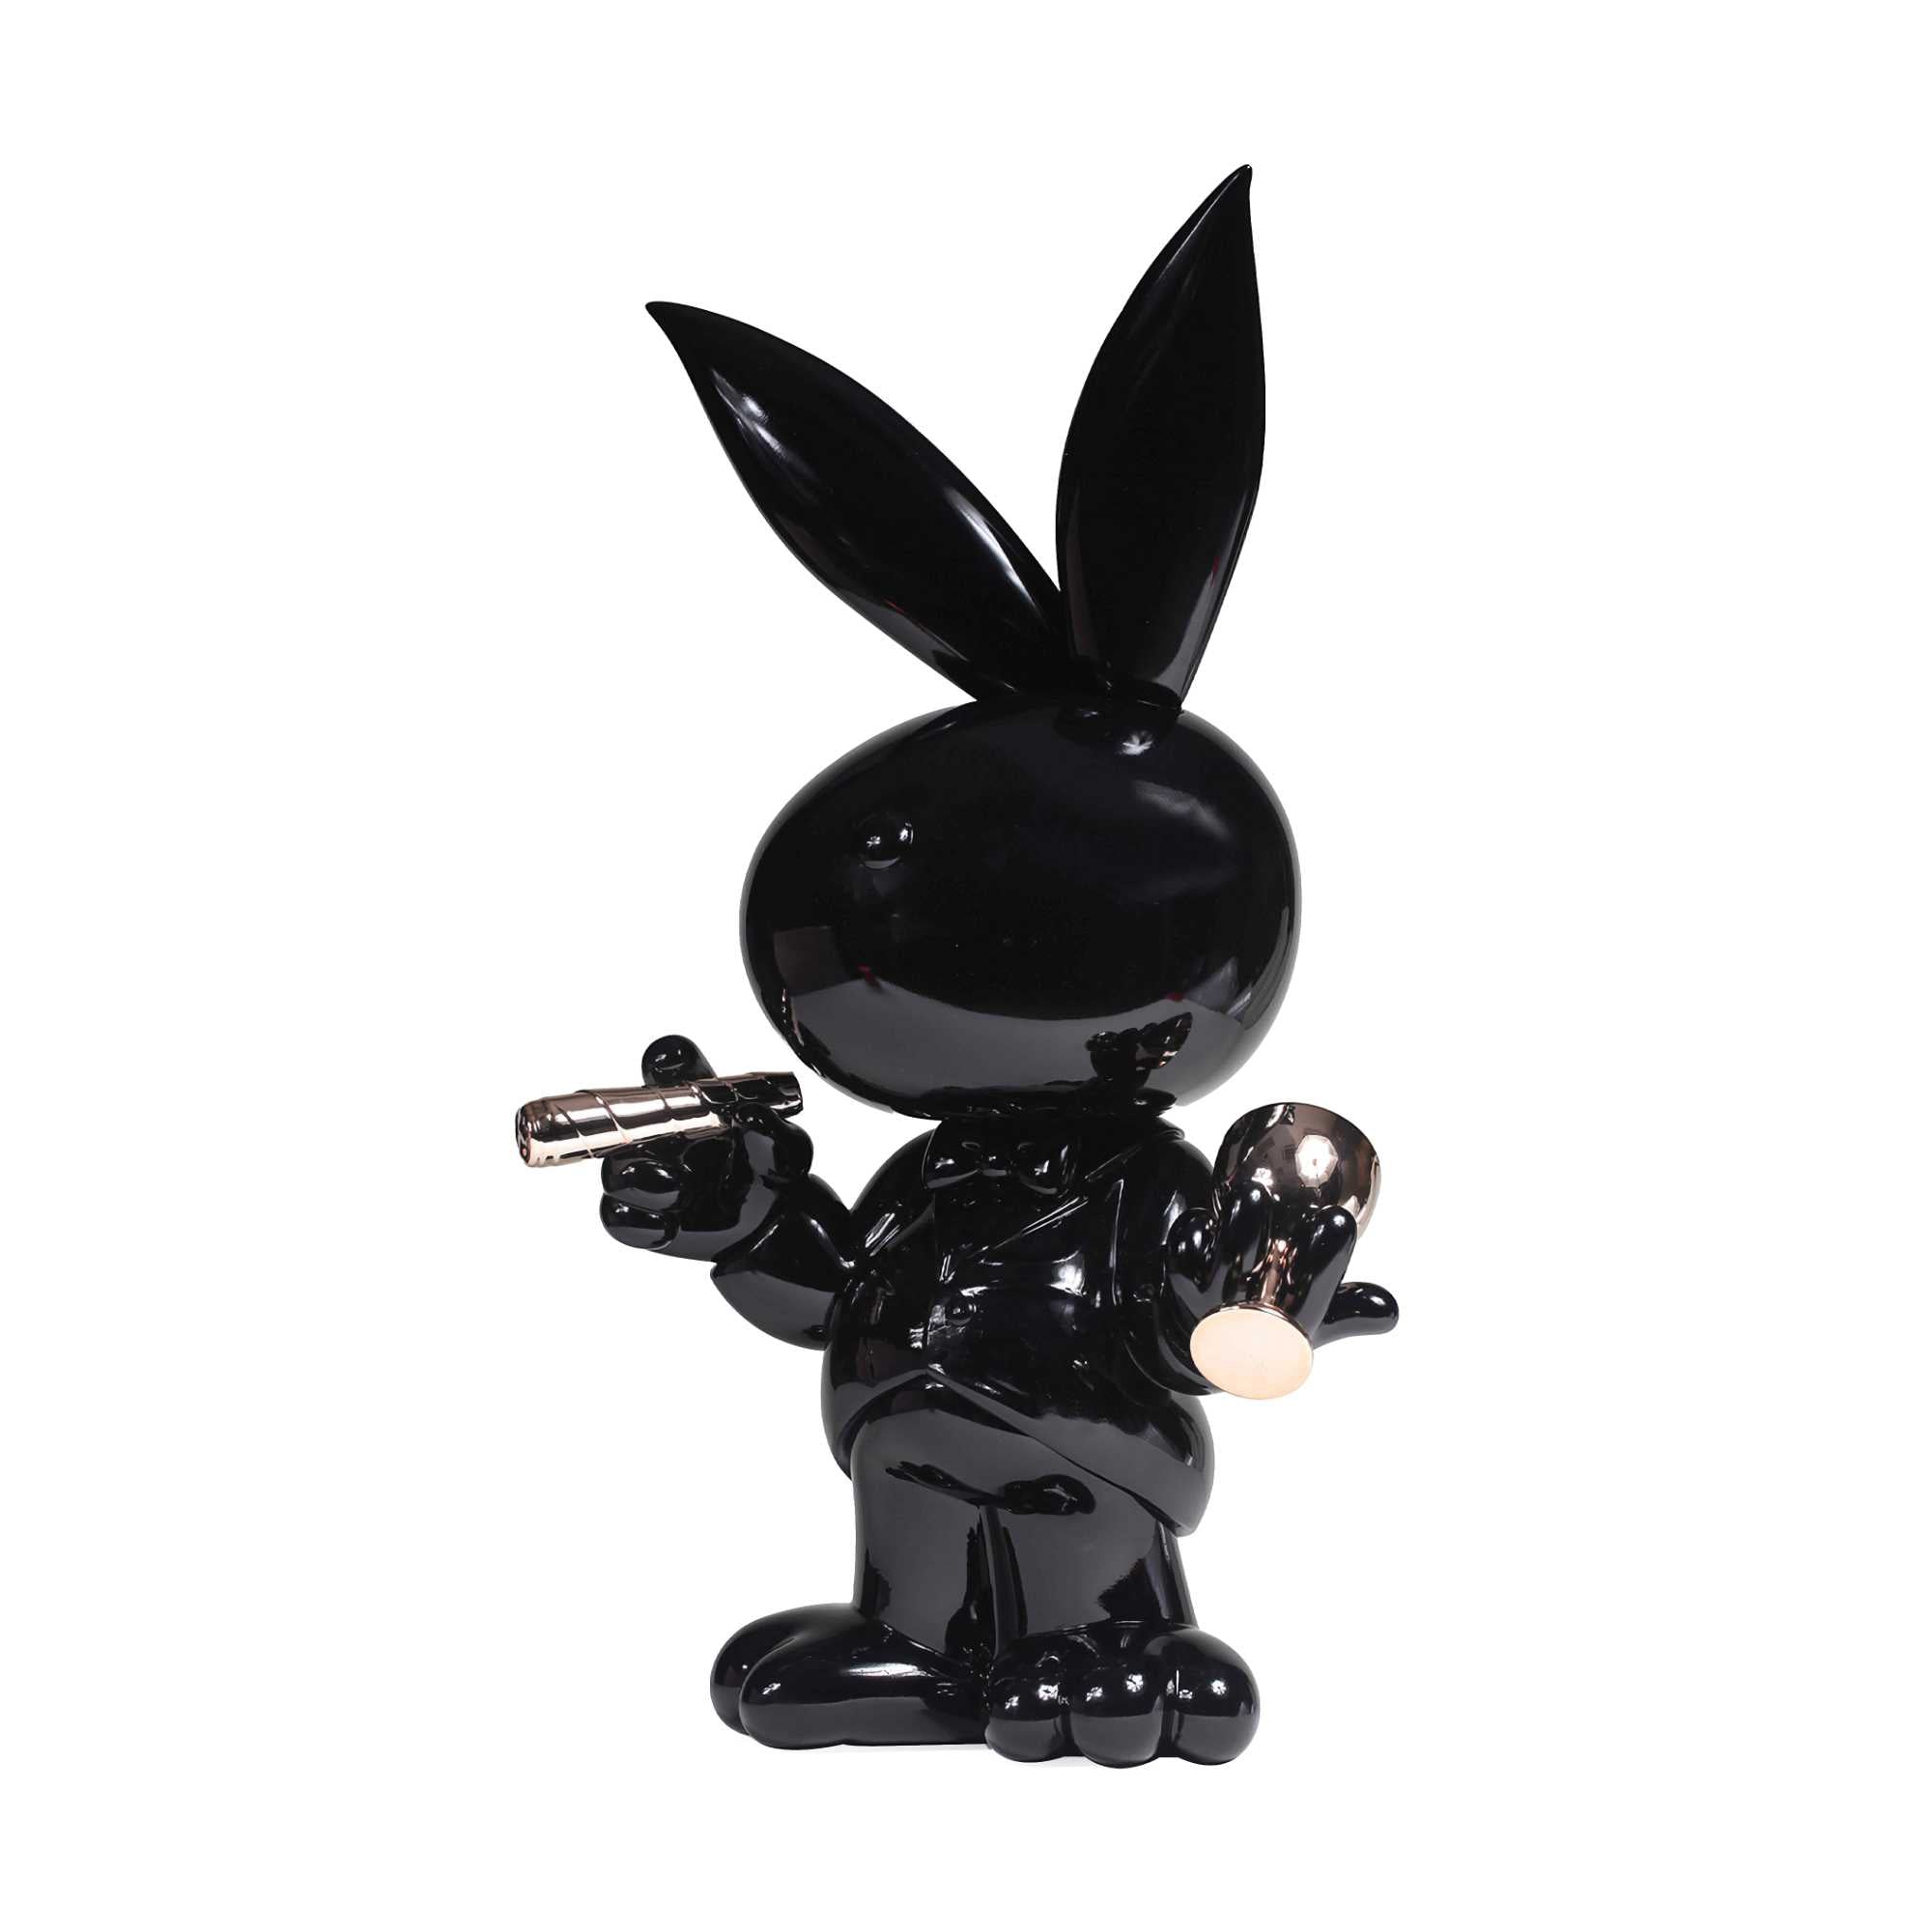 ZCWO x Playboy #4 Bunnys, Black